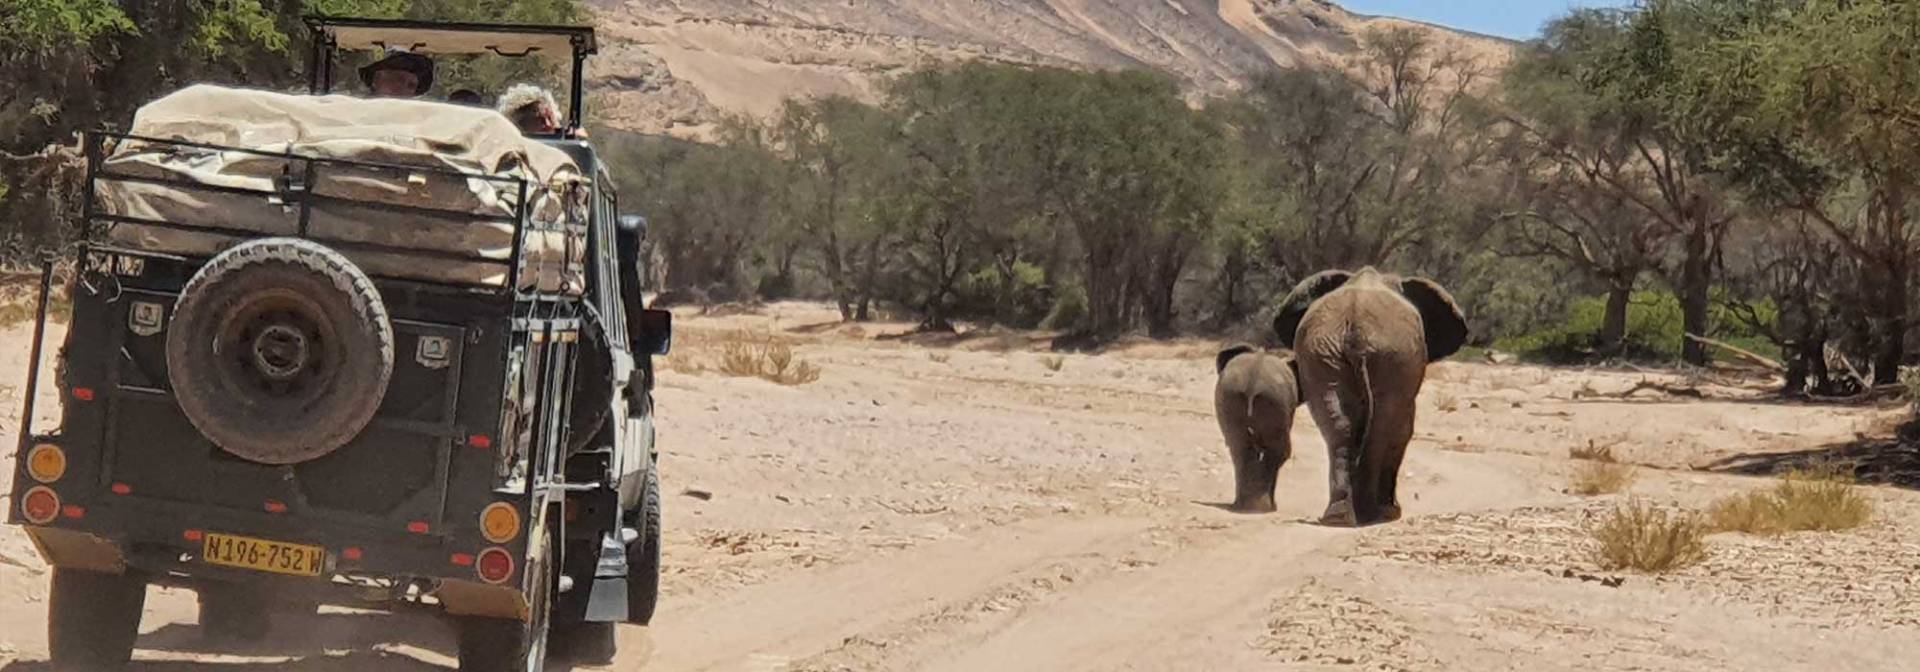 Desert adapted Elephants in Namibia